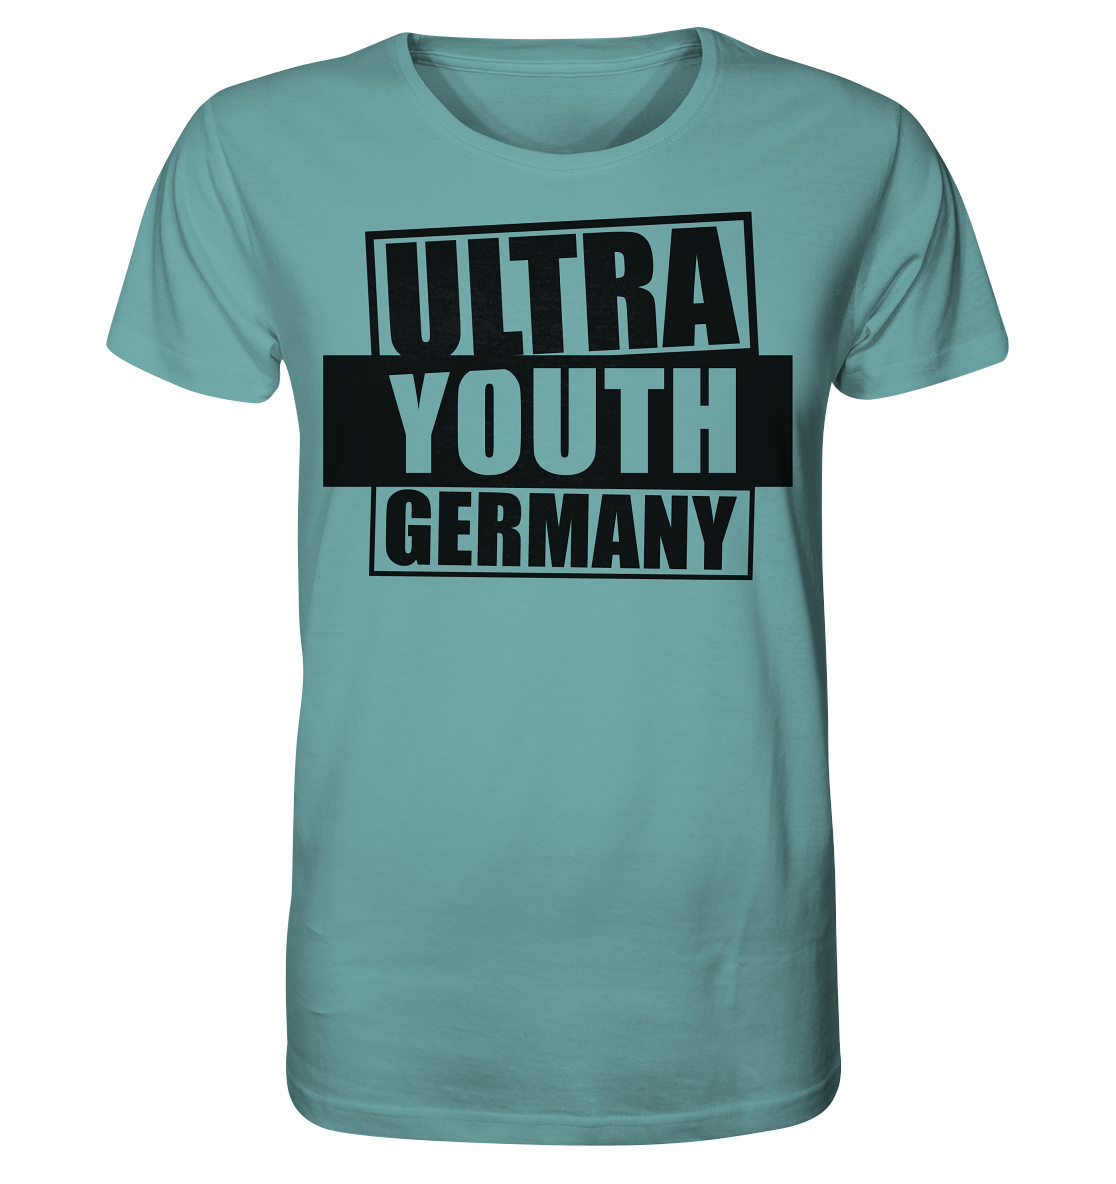 N.O.S.W. BLOCK Ultras Shirt "ULTRA YOUTH GERMANY" Männer Organic T-Shirt citadel blau